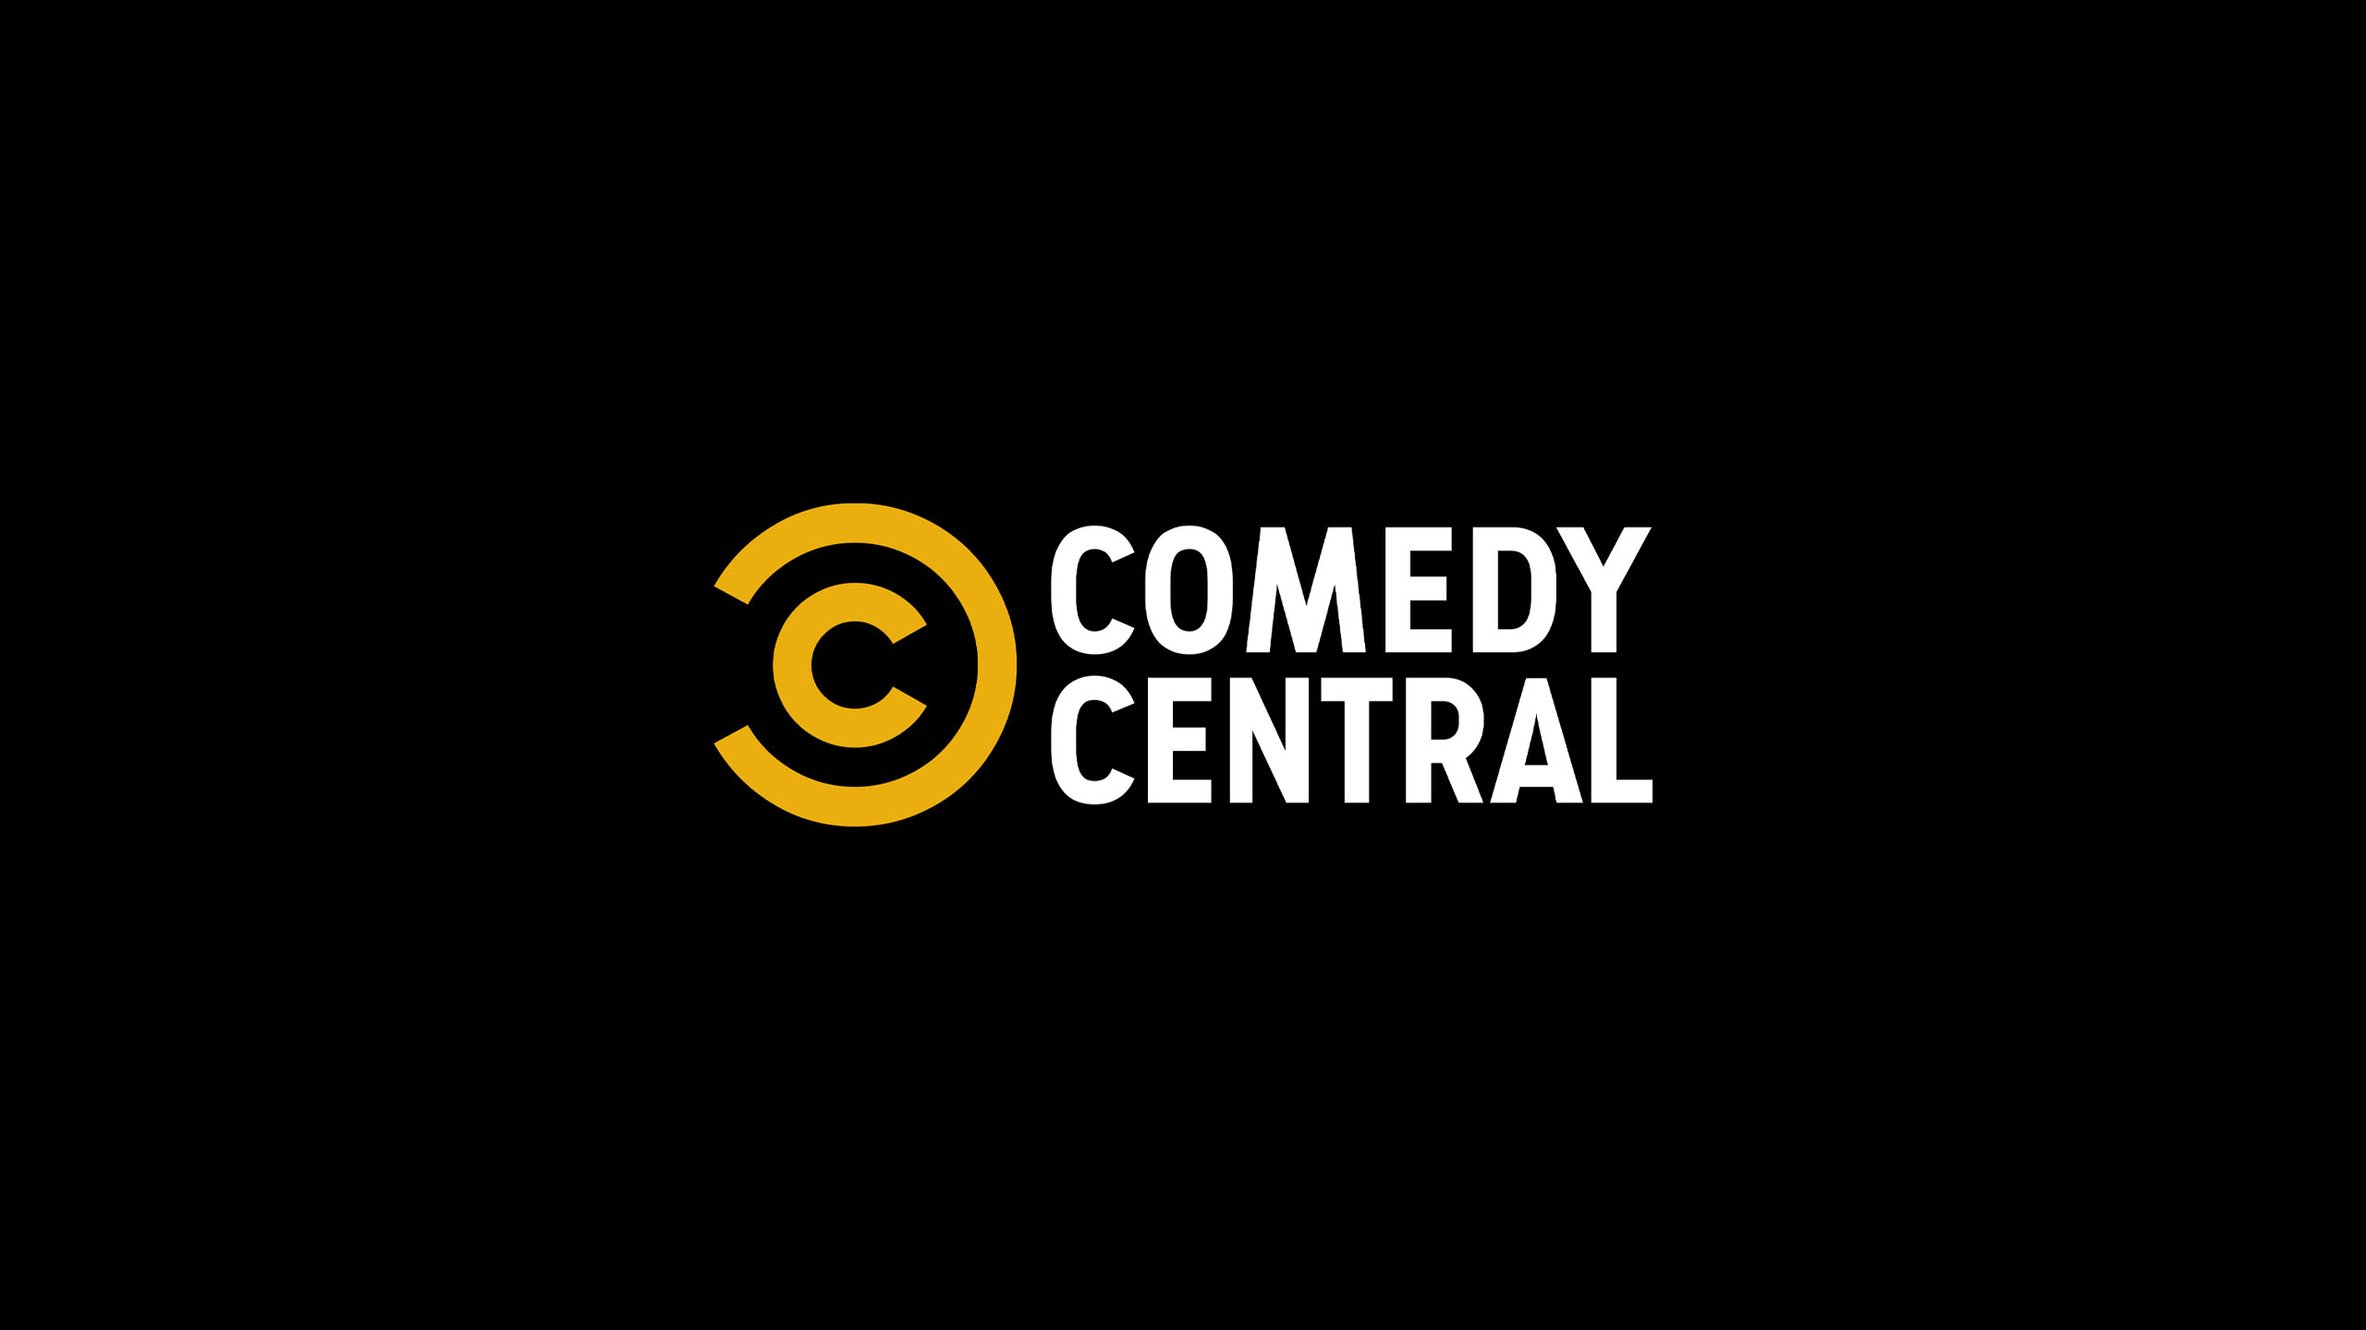 Seeking Background/Extras For Comedy Central Digital Sketch/Parody